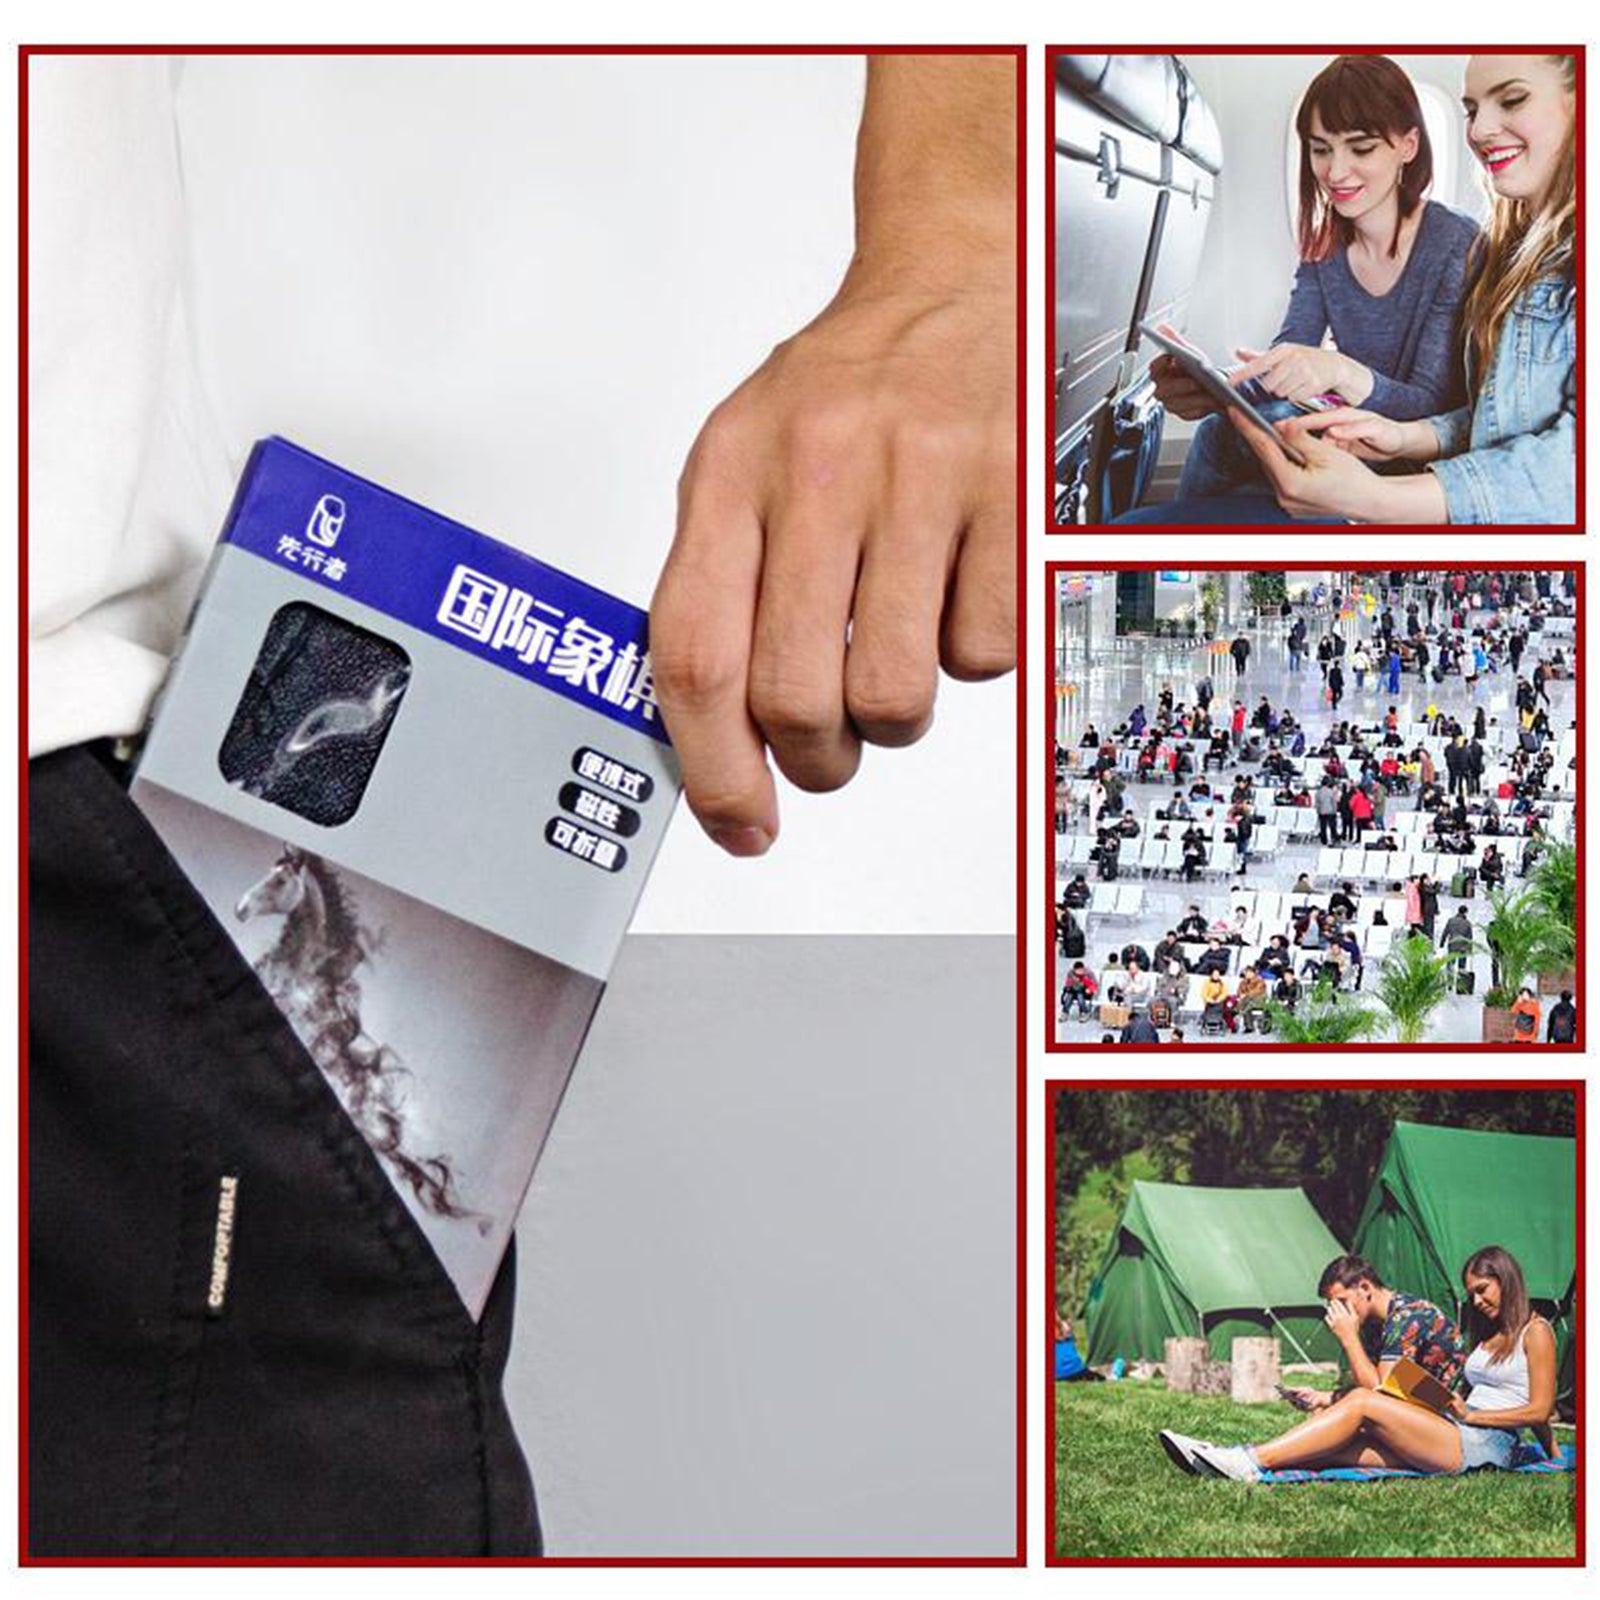 Foldable Mini Magnetic Chess Set Portable Wallet Pocket Chess Board Game Set